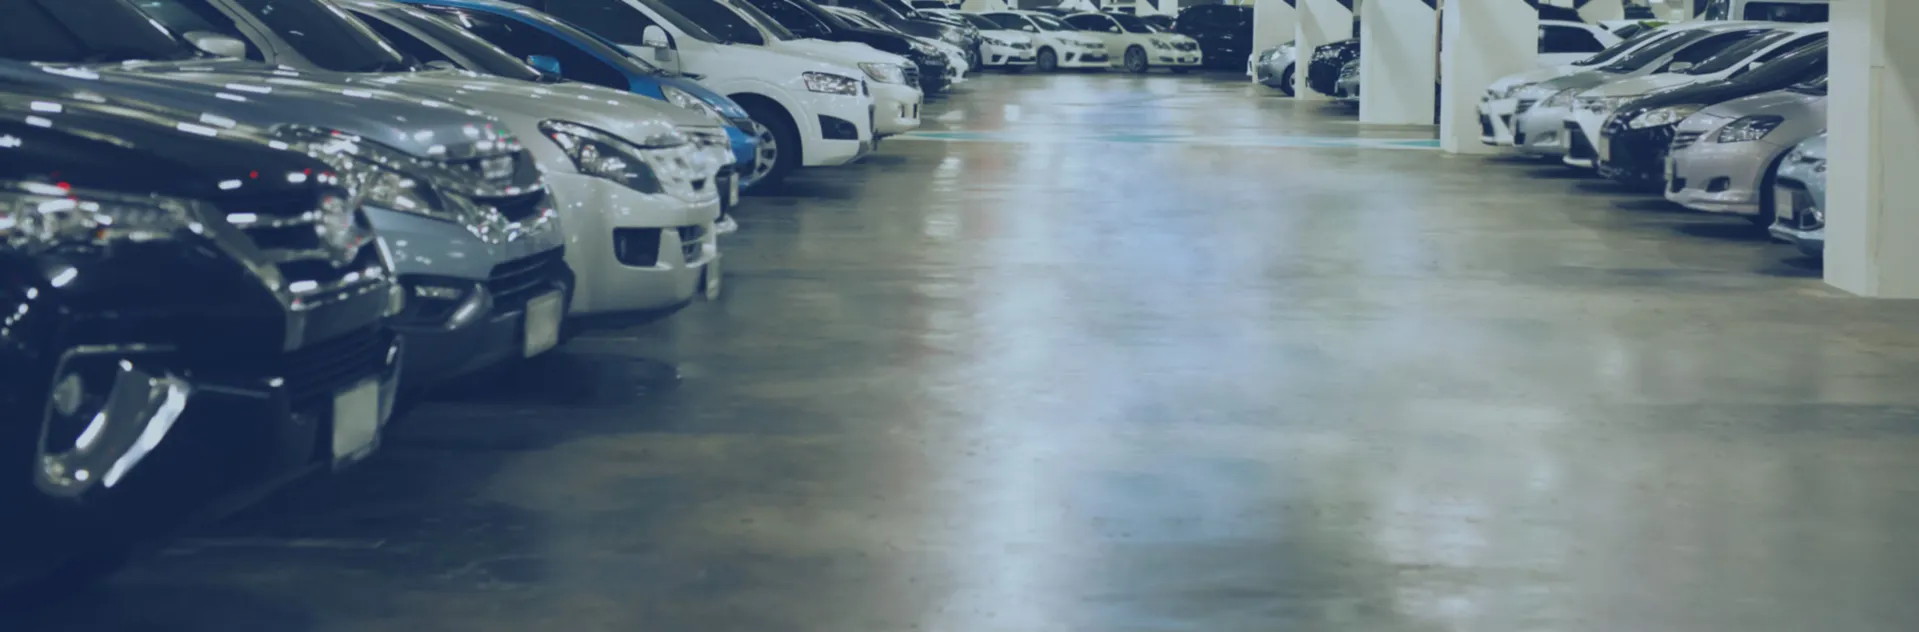 Cars parked inside an indoor car park